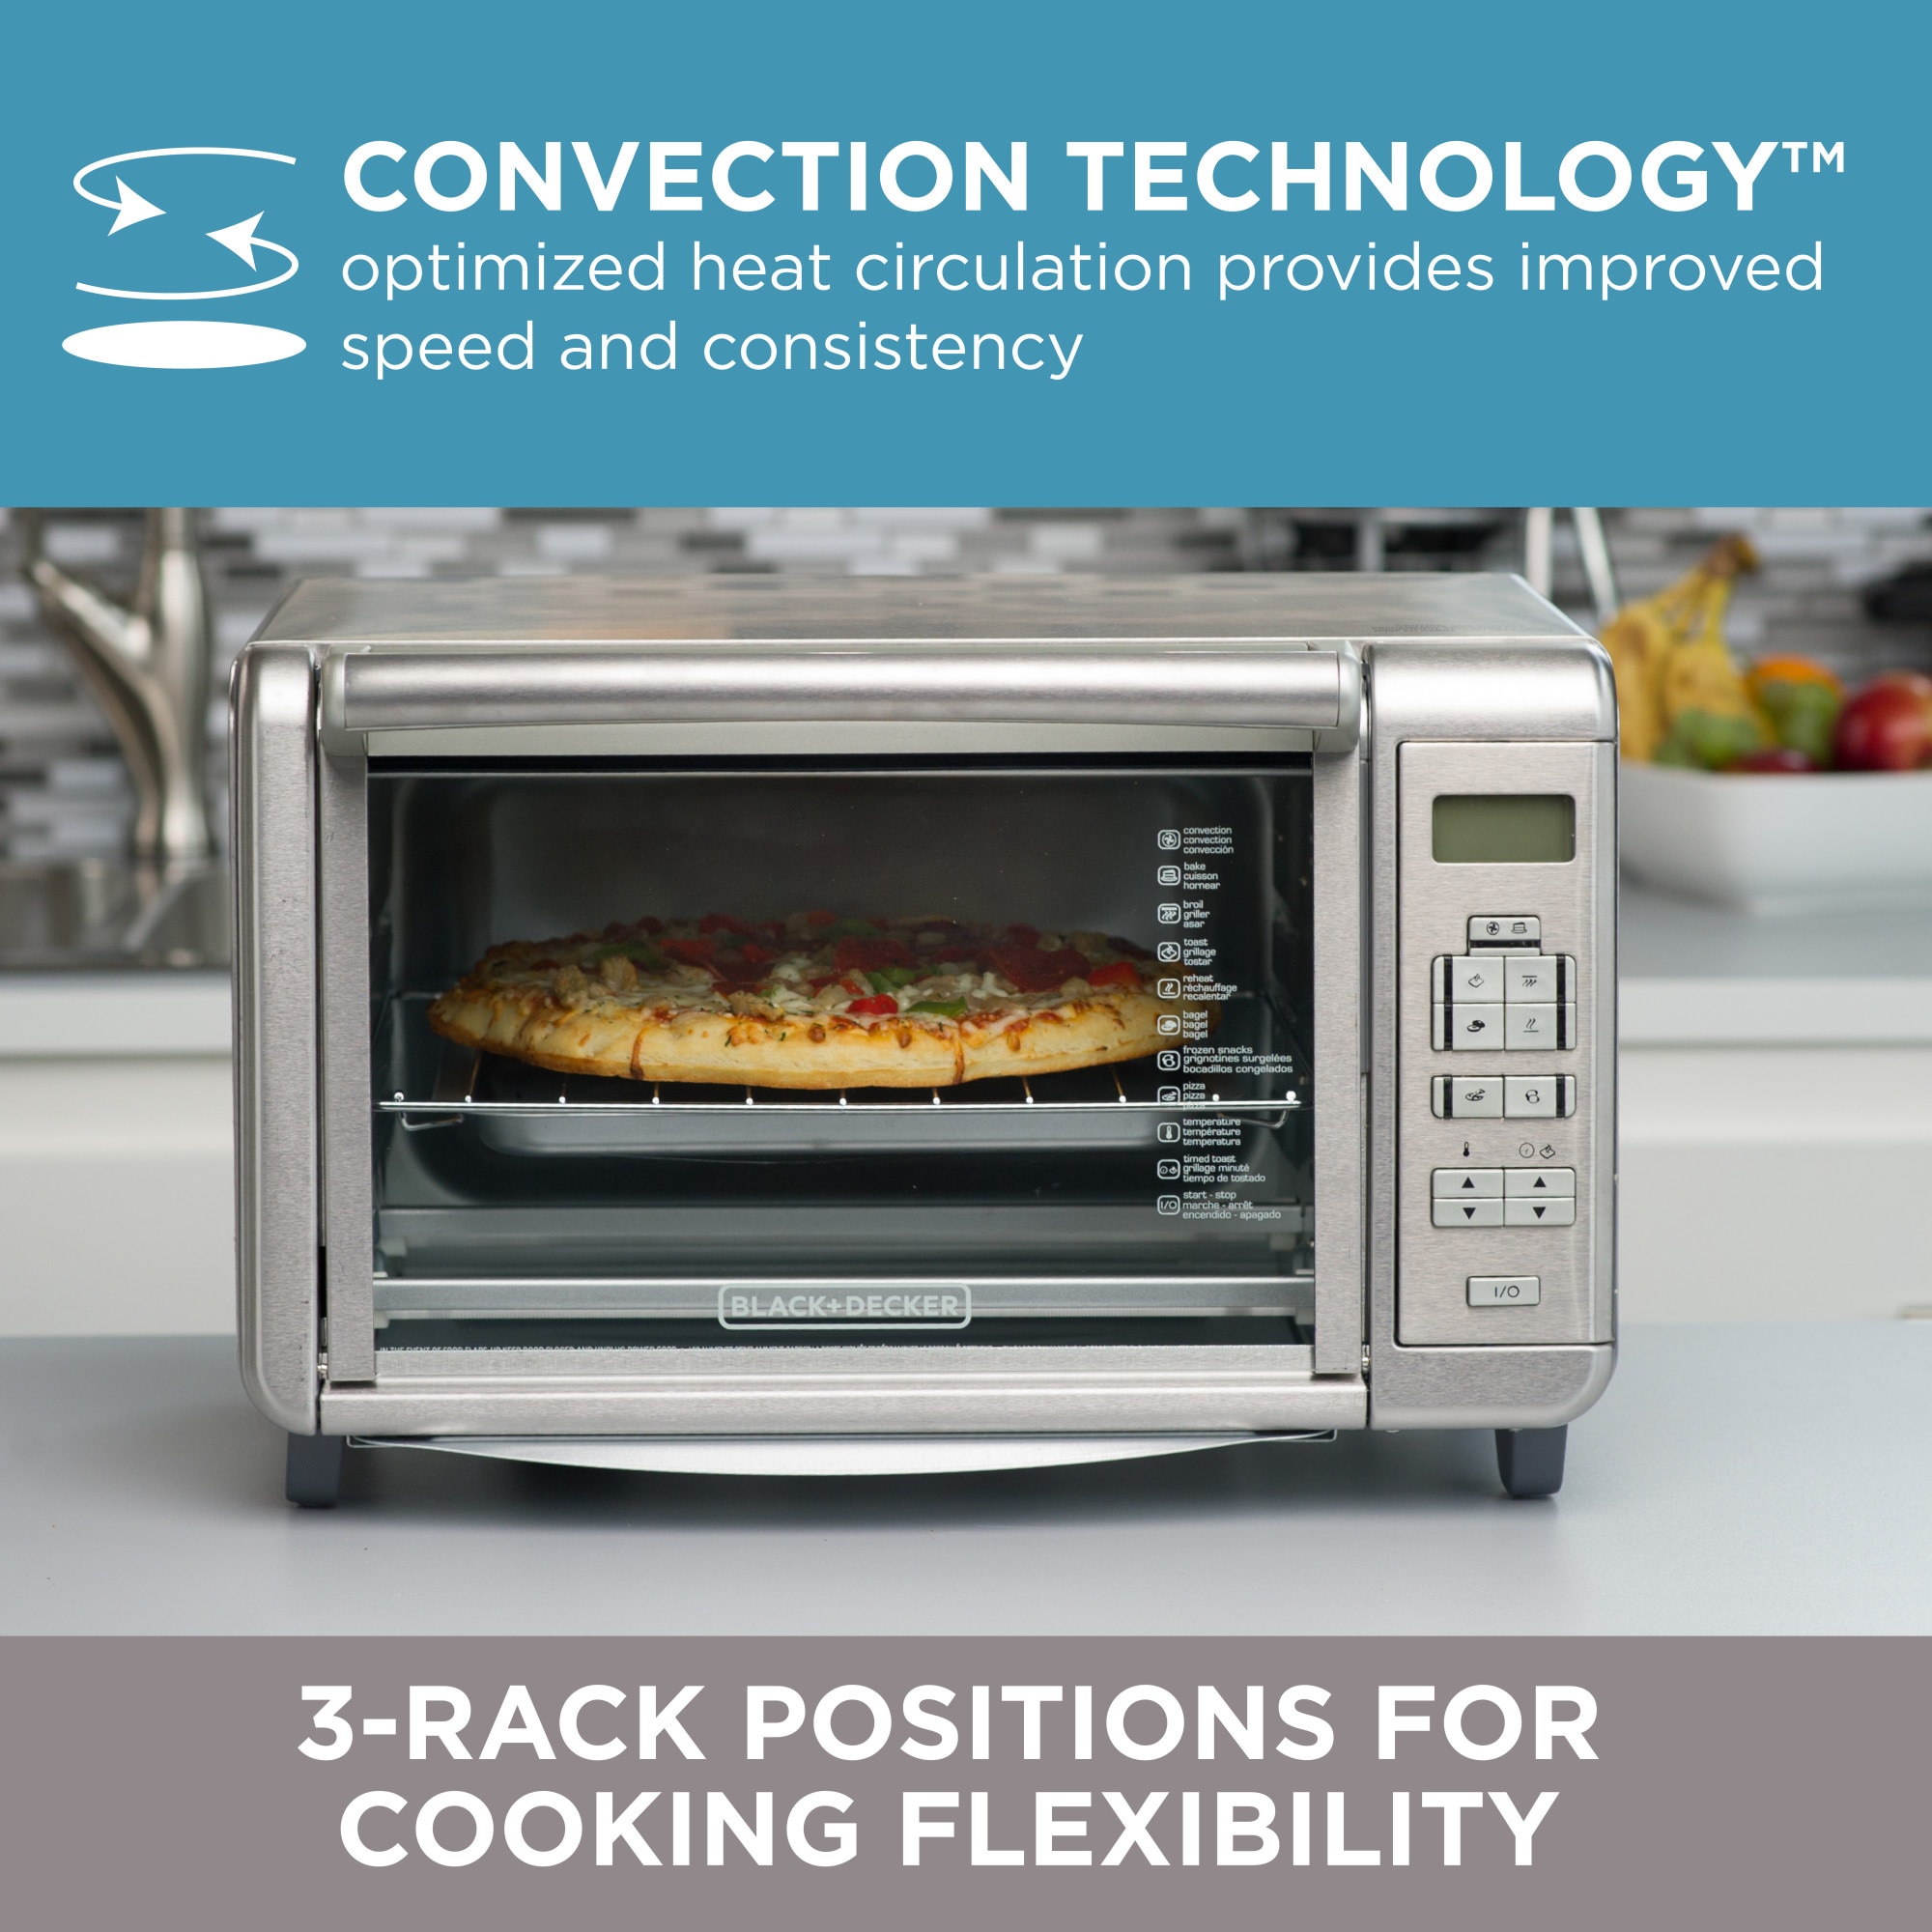 BLACK+DECKER 8-Slice Stainless Steel Convection Toaster Oven (1500-Watt) at